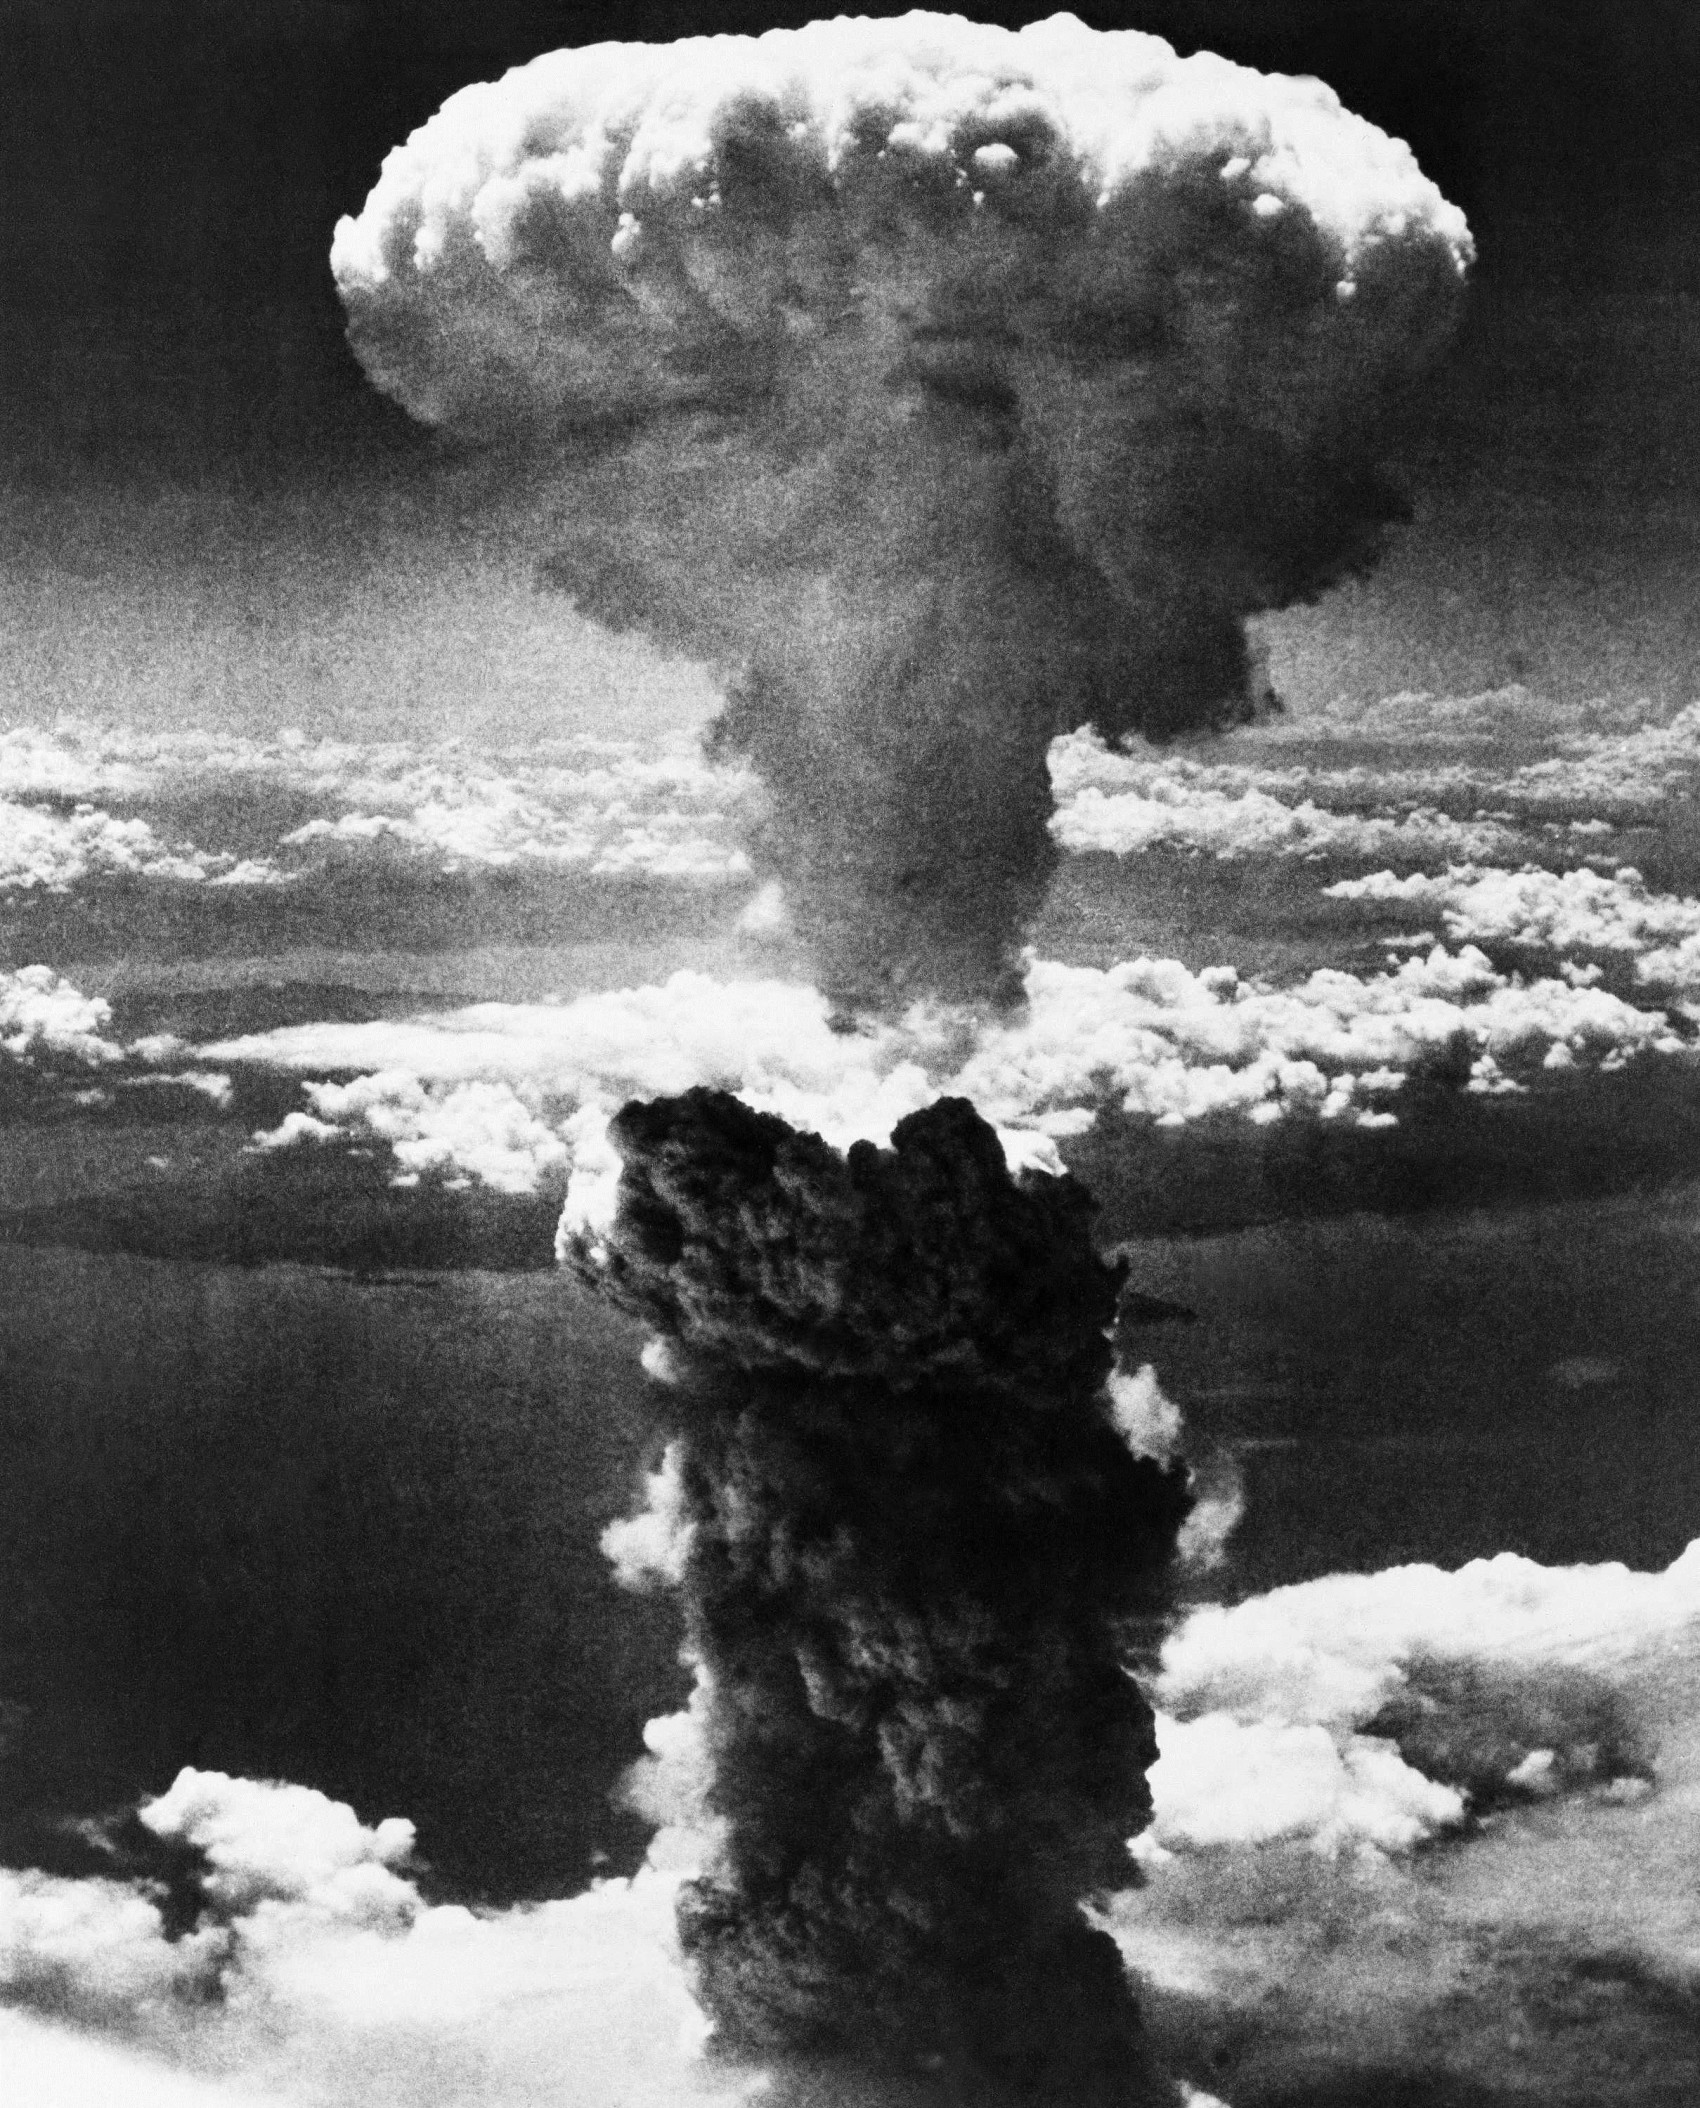 Do you think the atomic bombings of Hiroshima and Nagasaki were